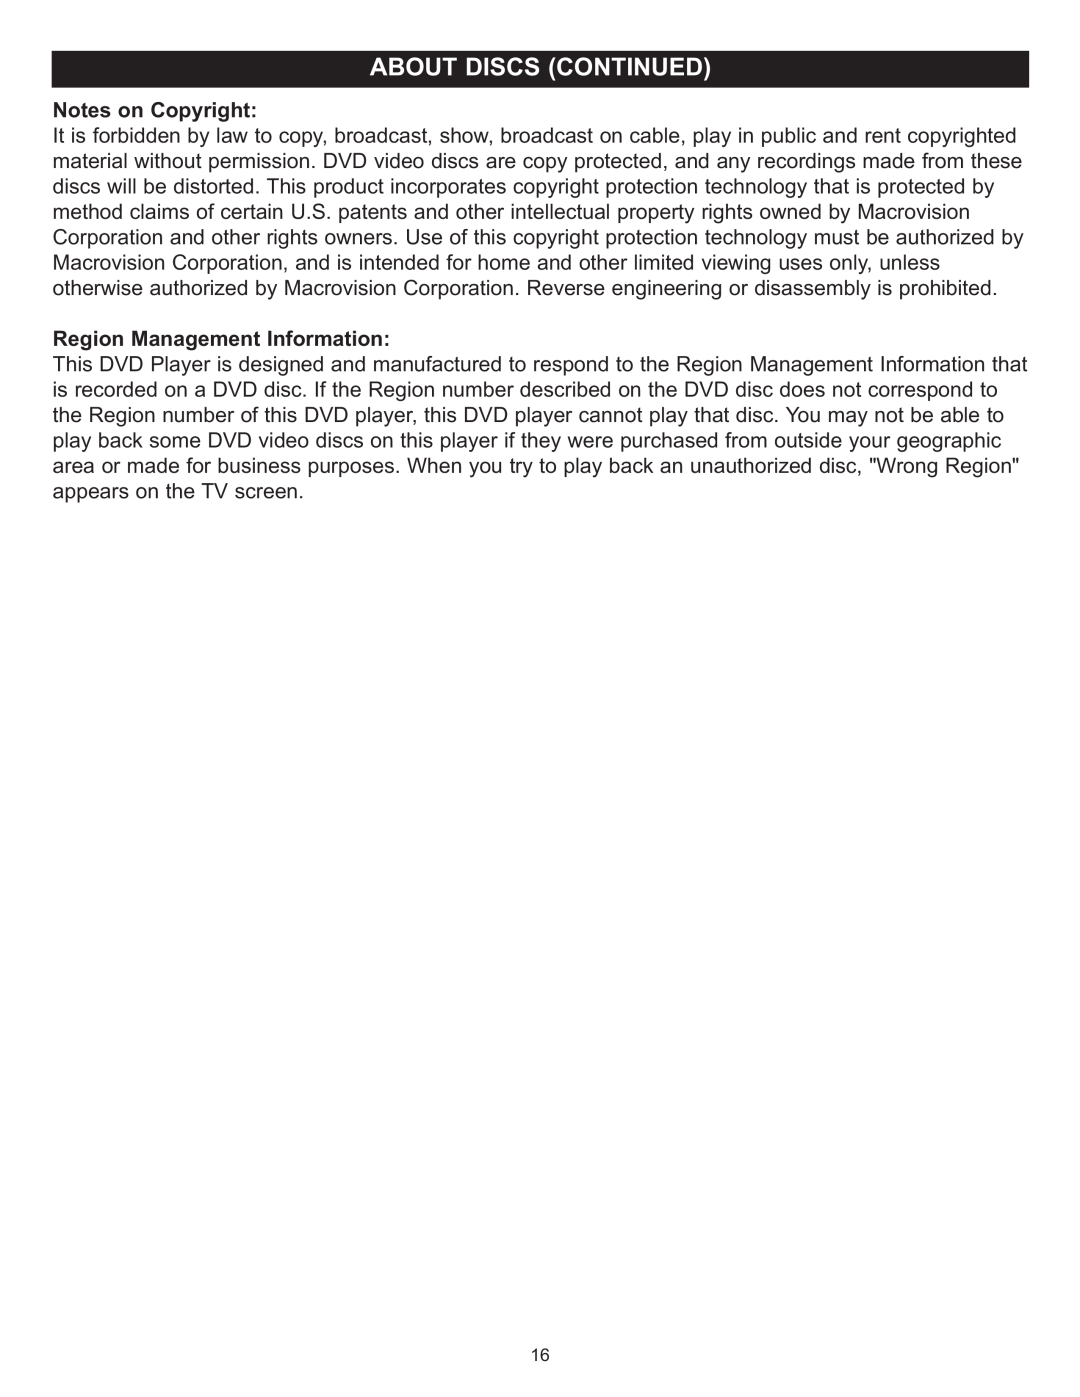 Memorex MIHT5005 manual Notes on Copyright, Region Management Information 